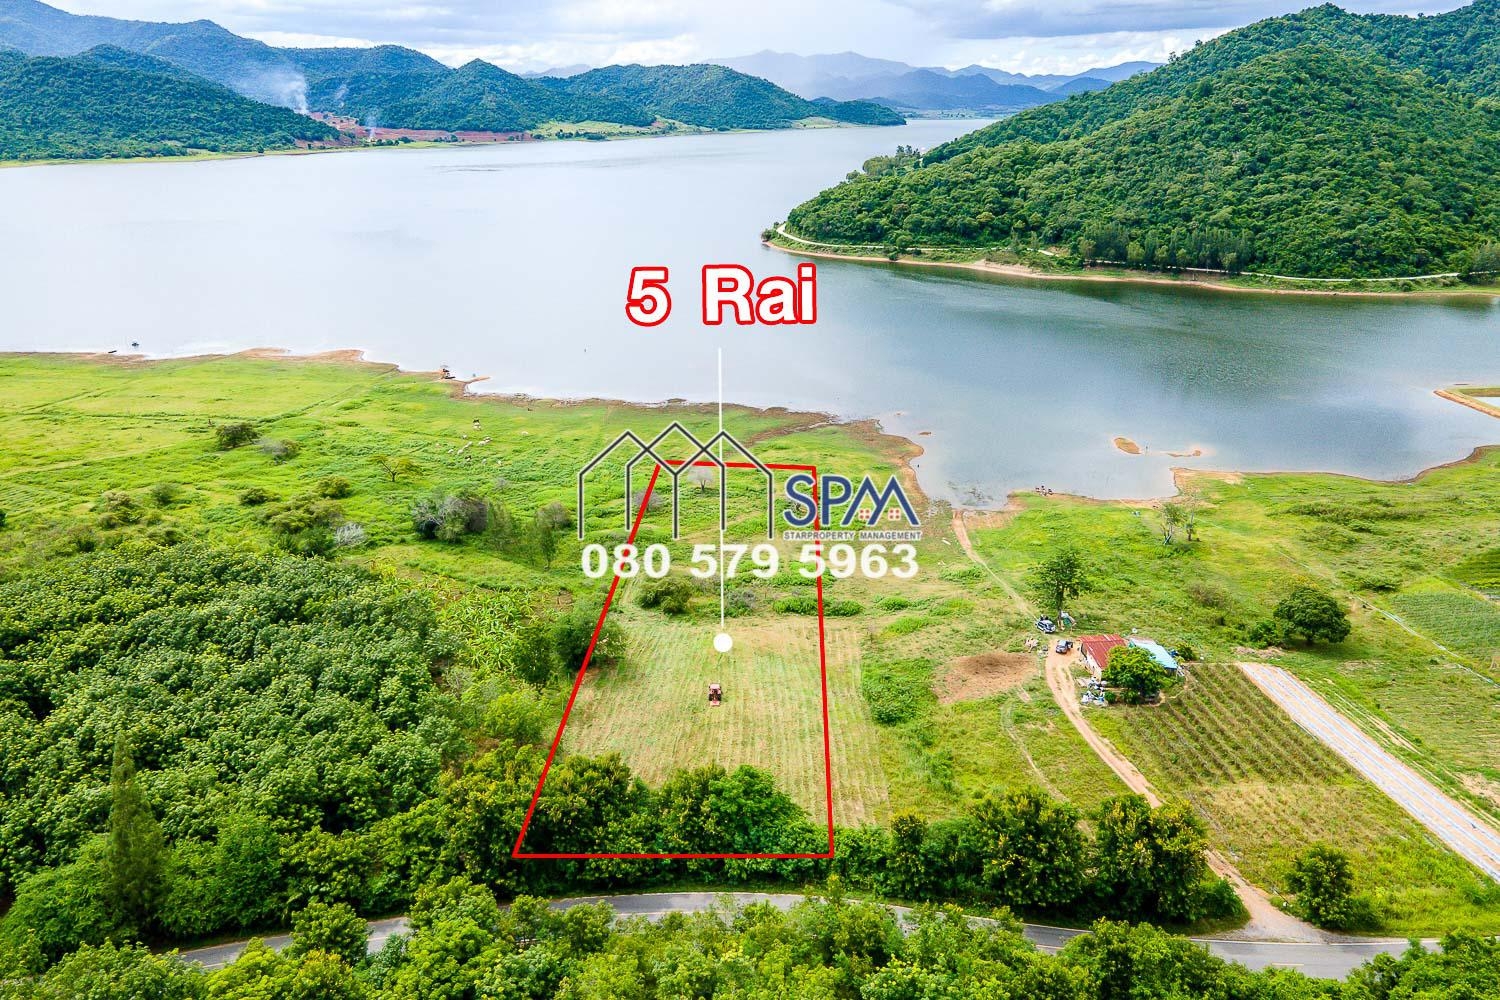 Farm Land for Sale 5 Rai price 1.5 Million Baht, Great mountain and lake view